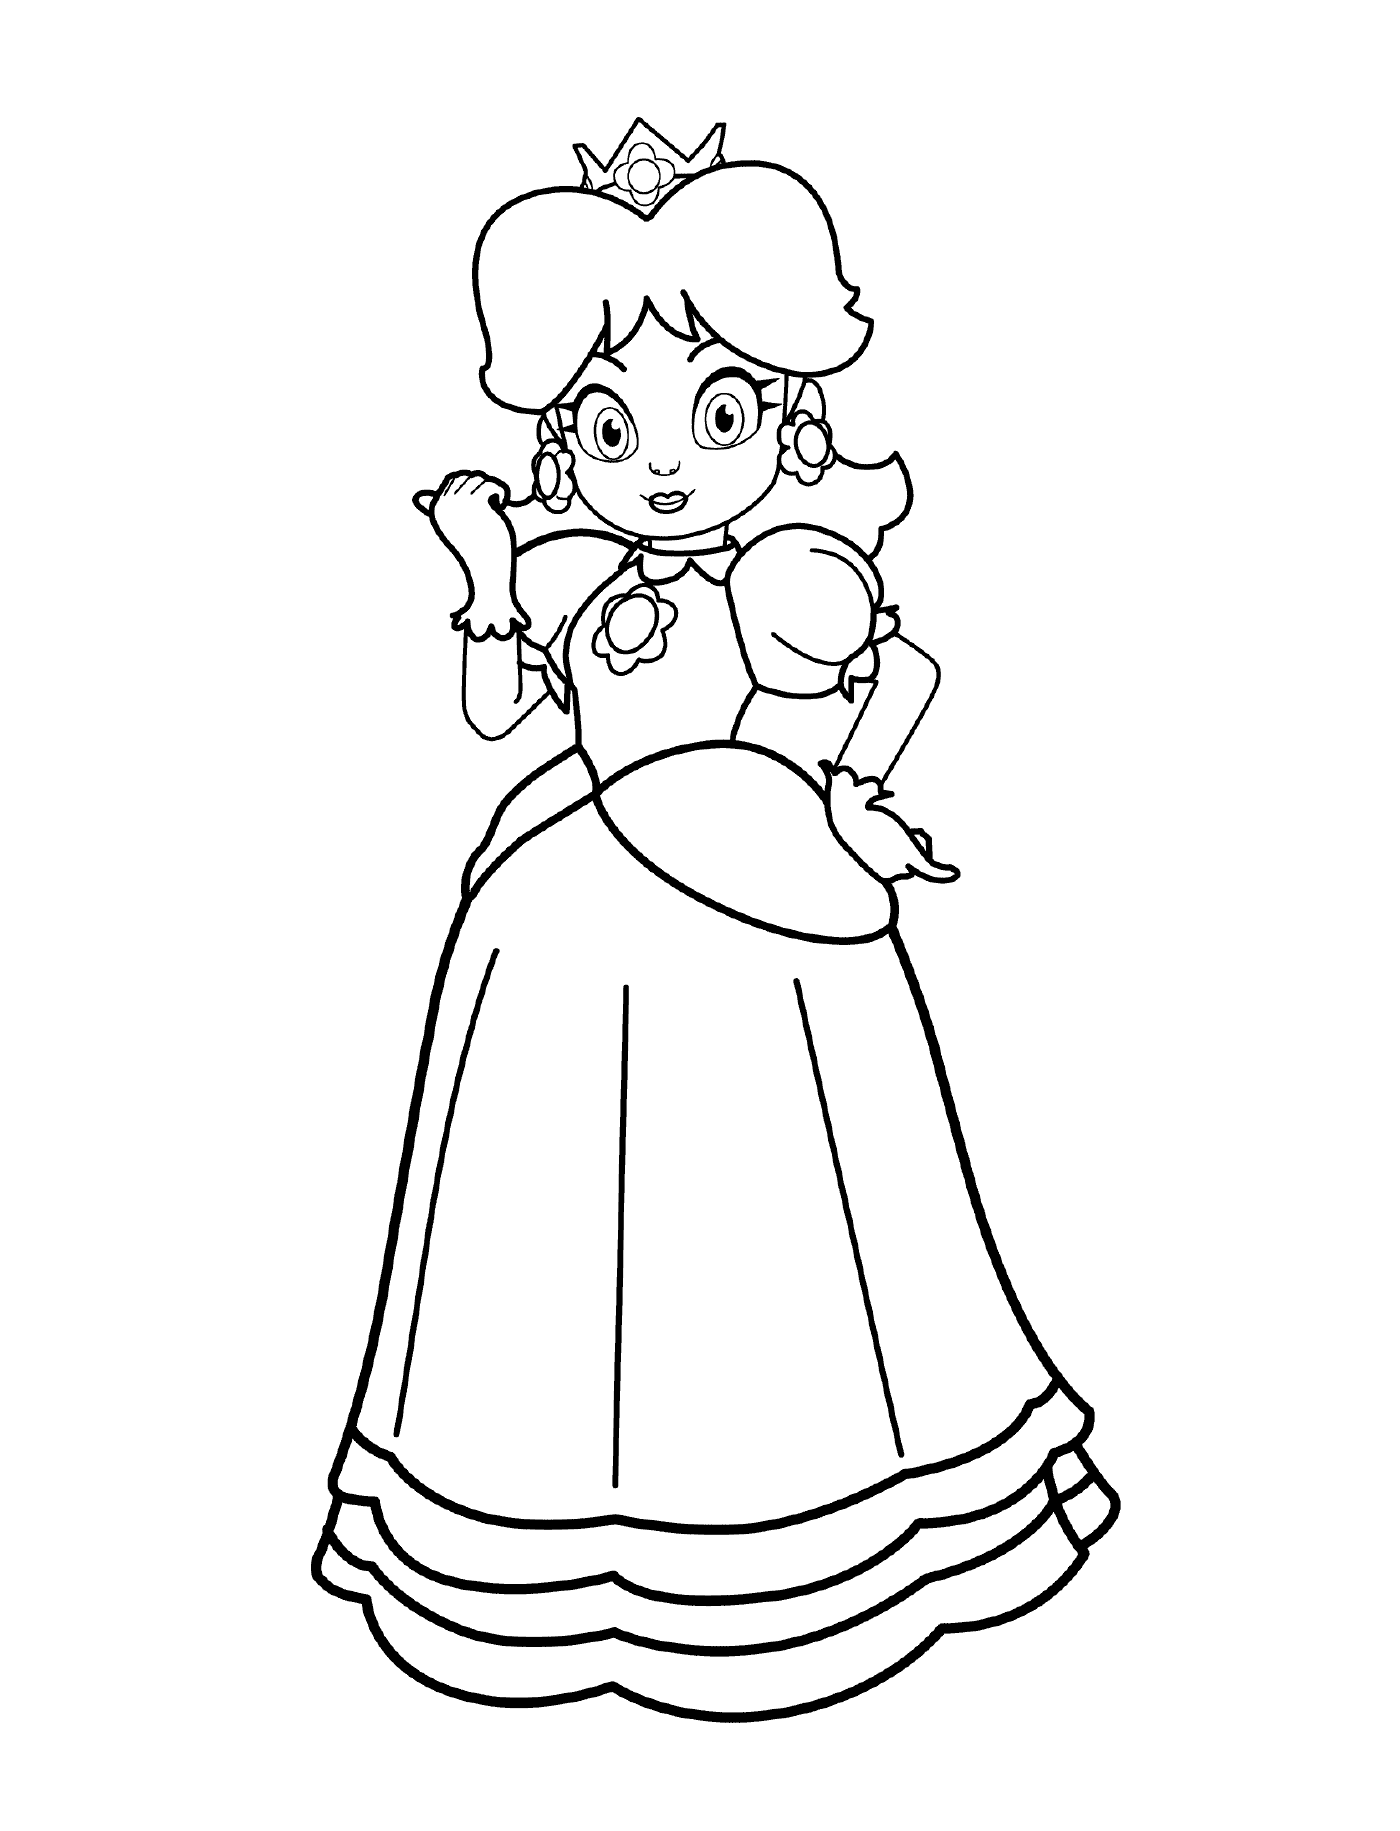  Prinzessin Daisy, eine Frau im Kleid 